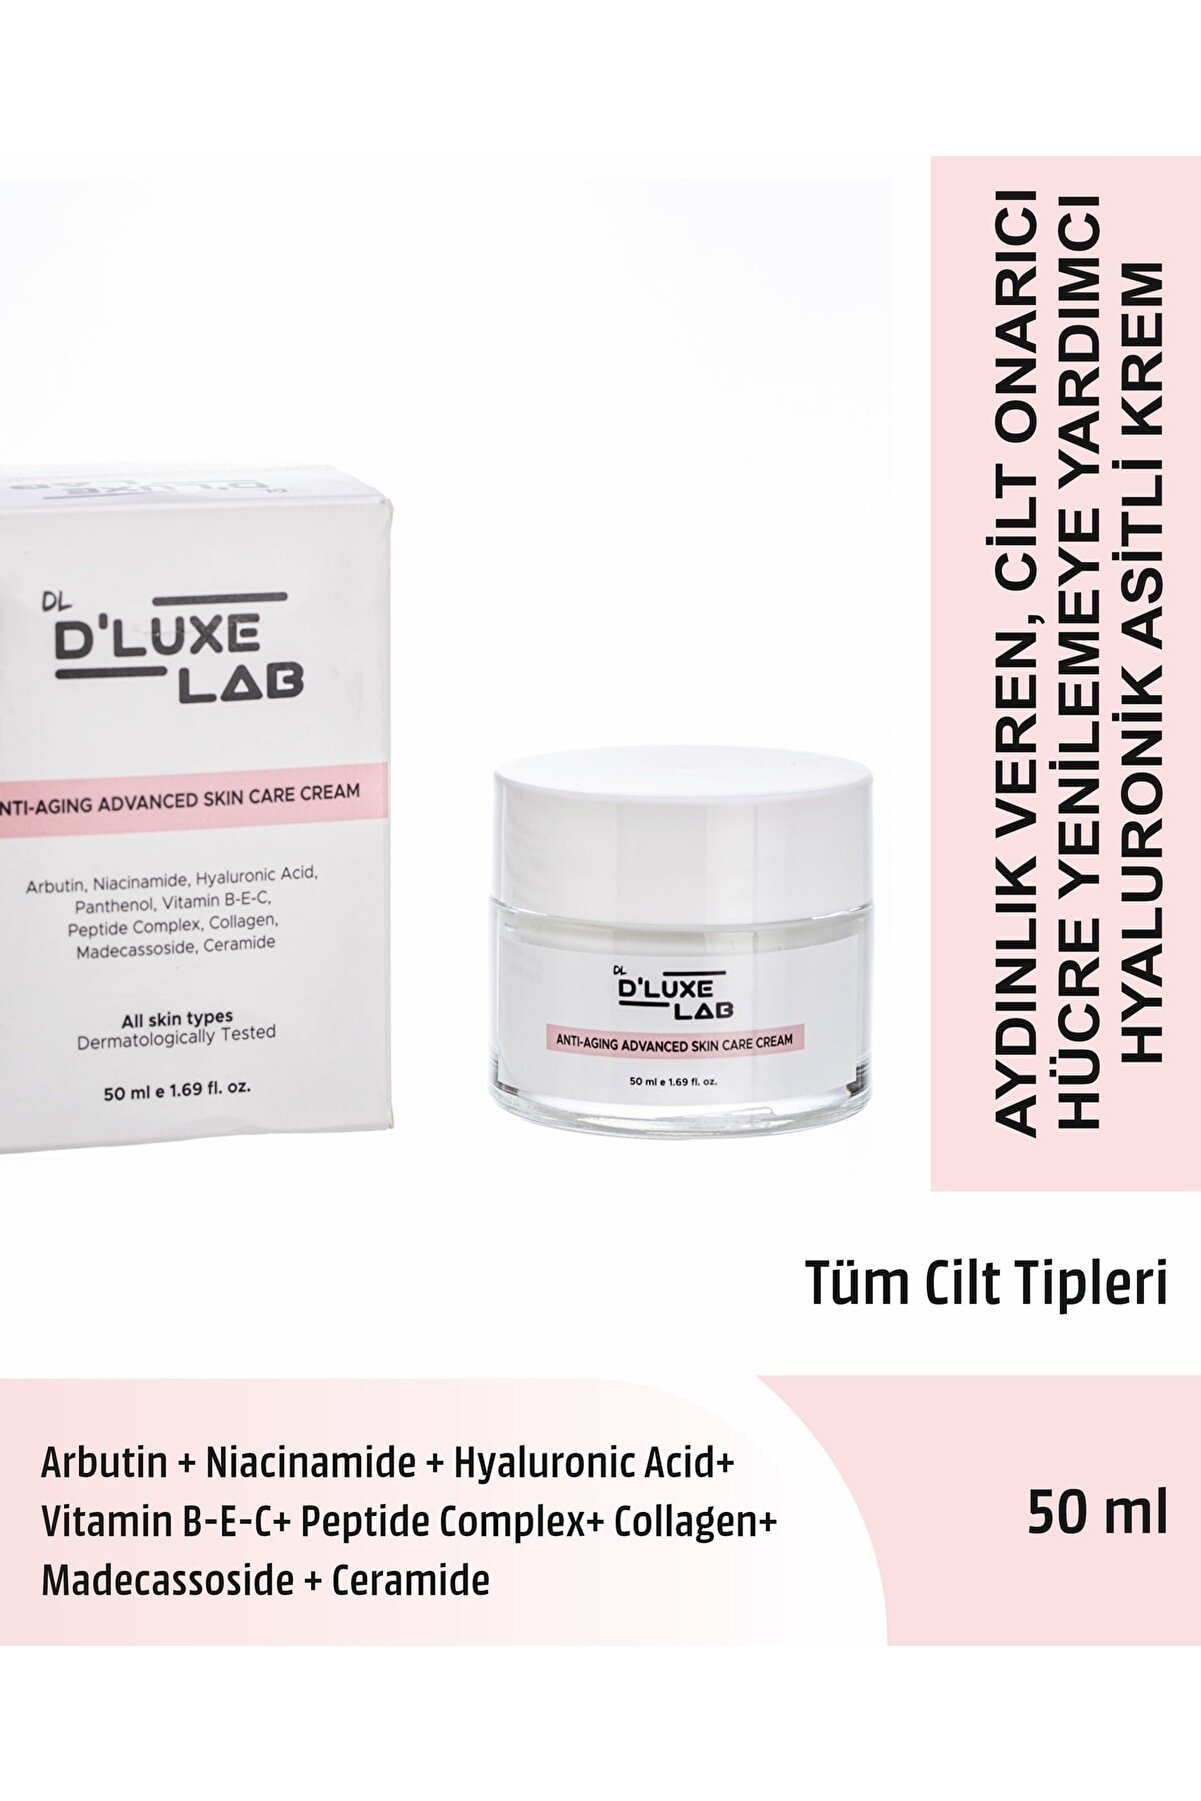 DLuxe Lab Anti-aging Advanced Skin Care Cream